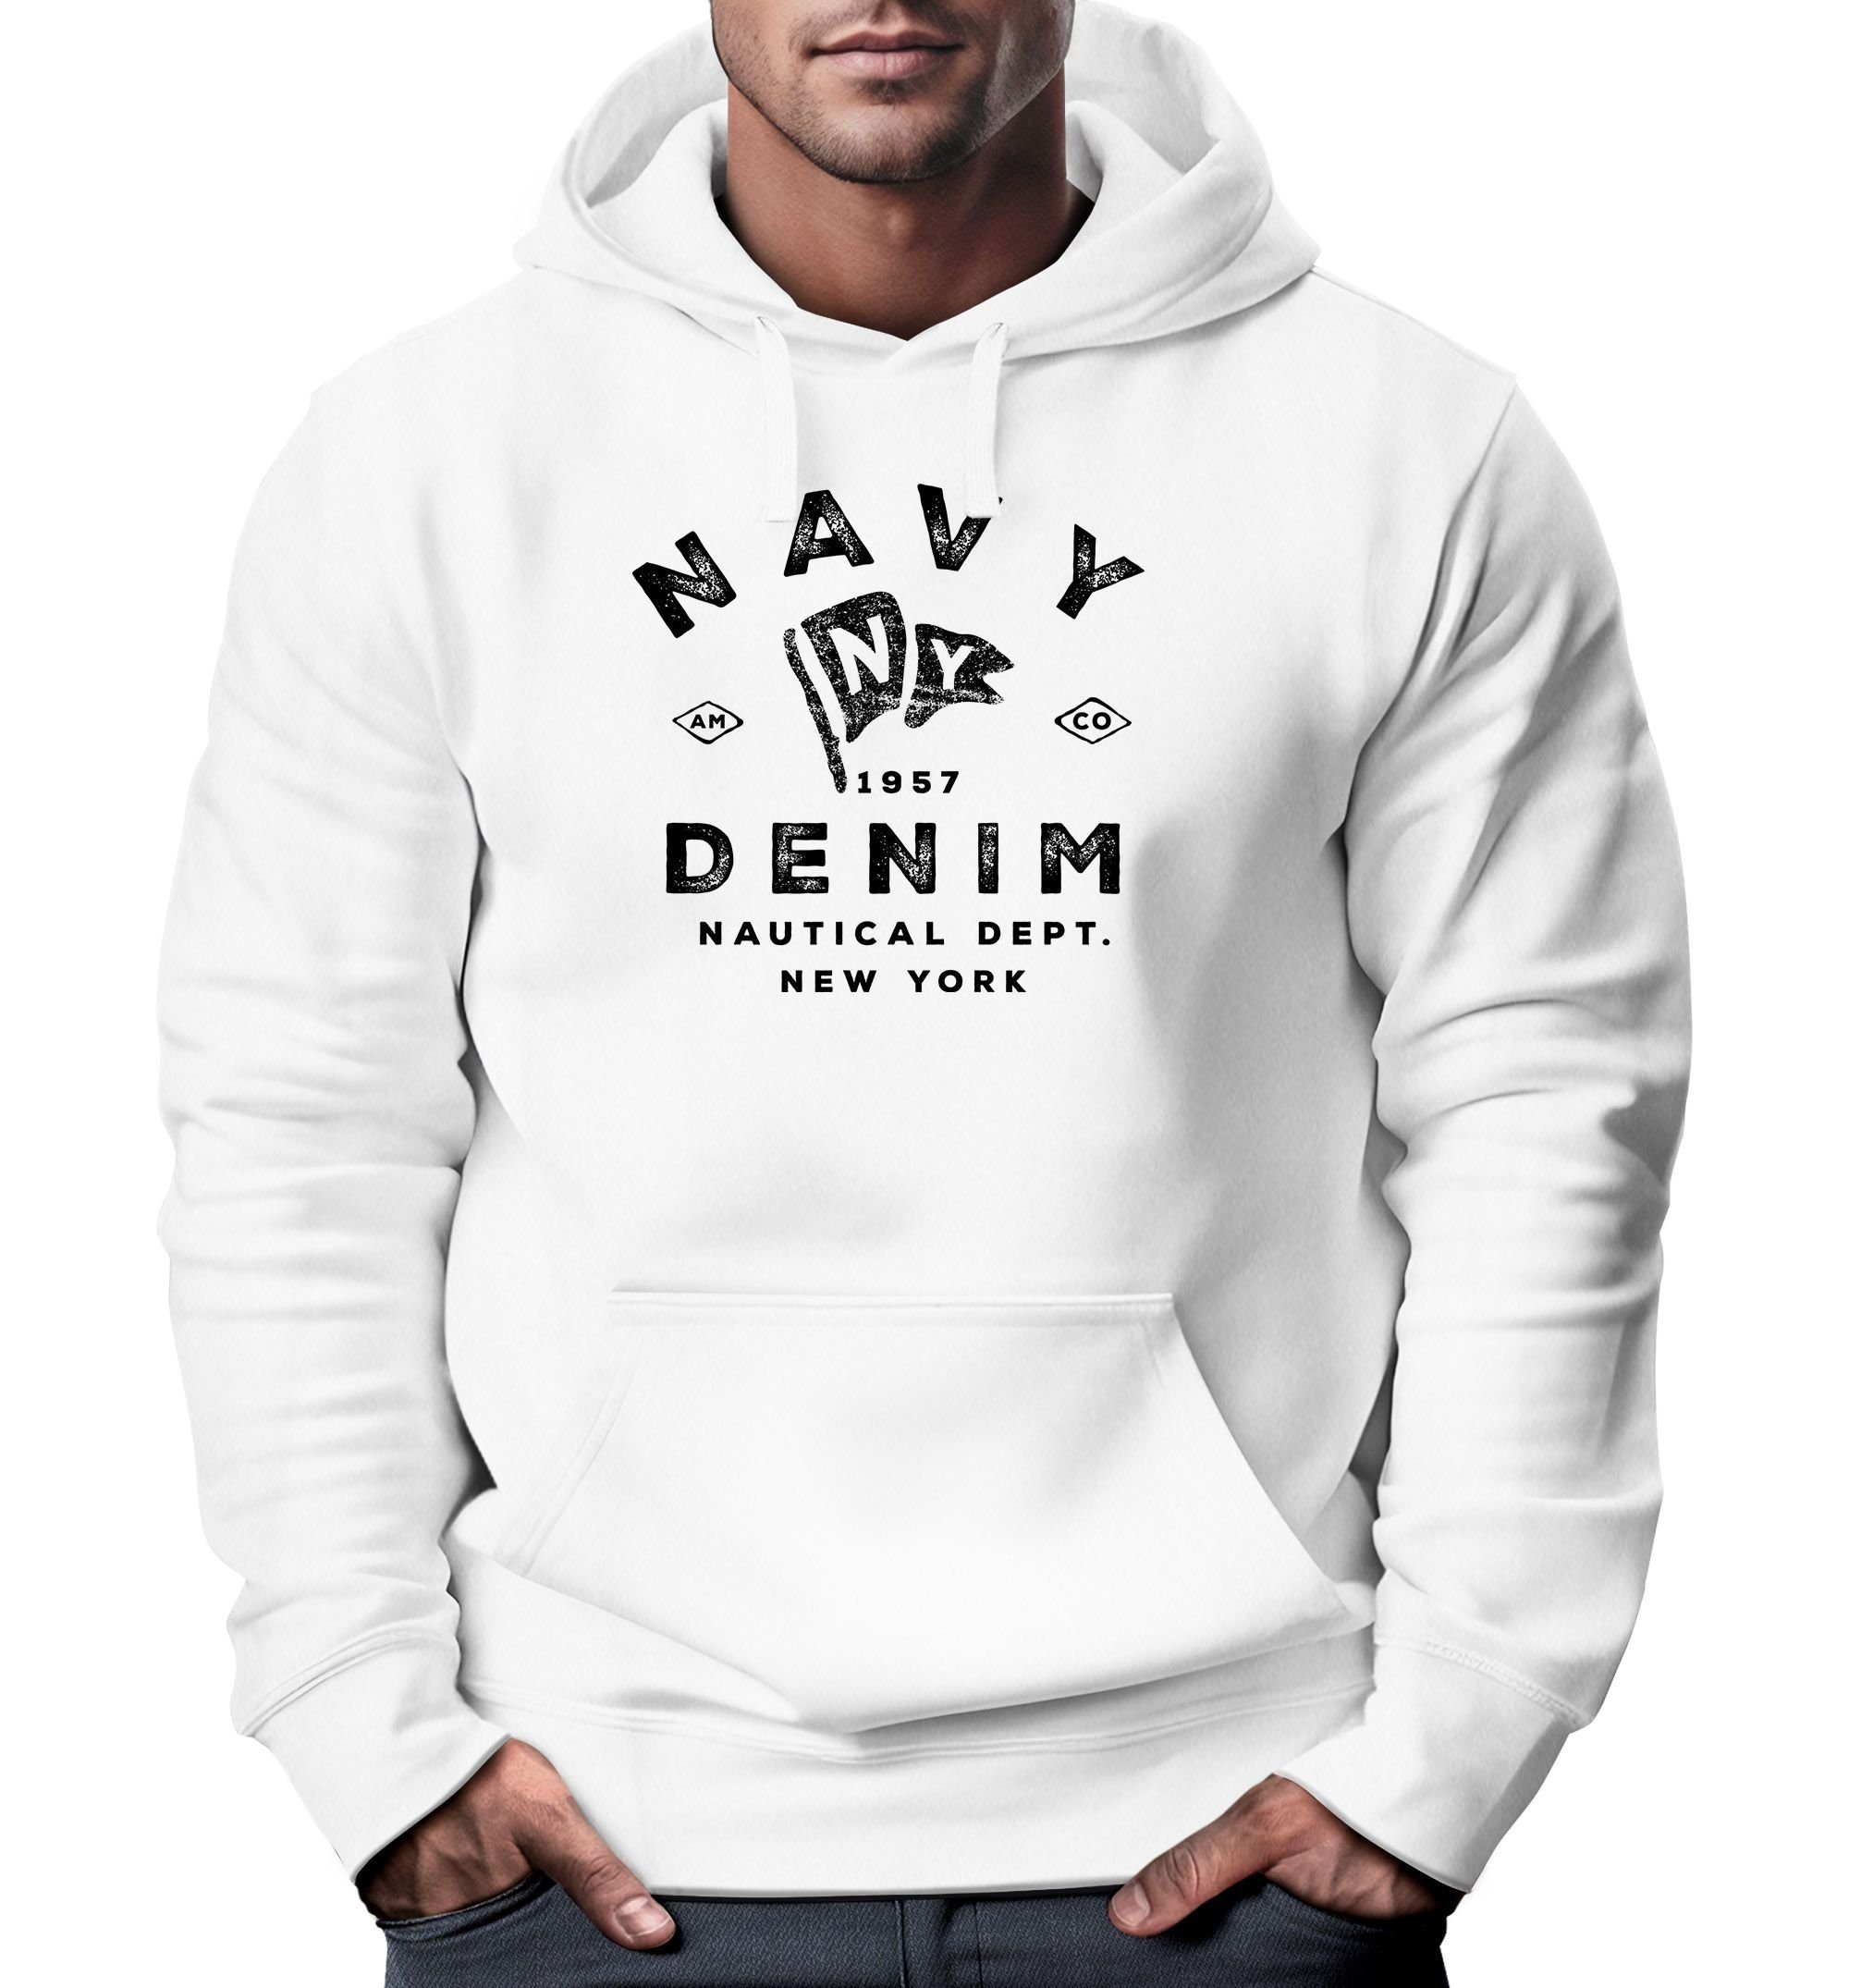 Neverless Hoodie Hoodie Herren Navy weiß MännerNeverless® Kapuzen-Pullover Motiv Nautical vintage Schriftzug Denim New York